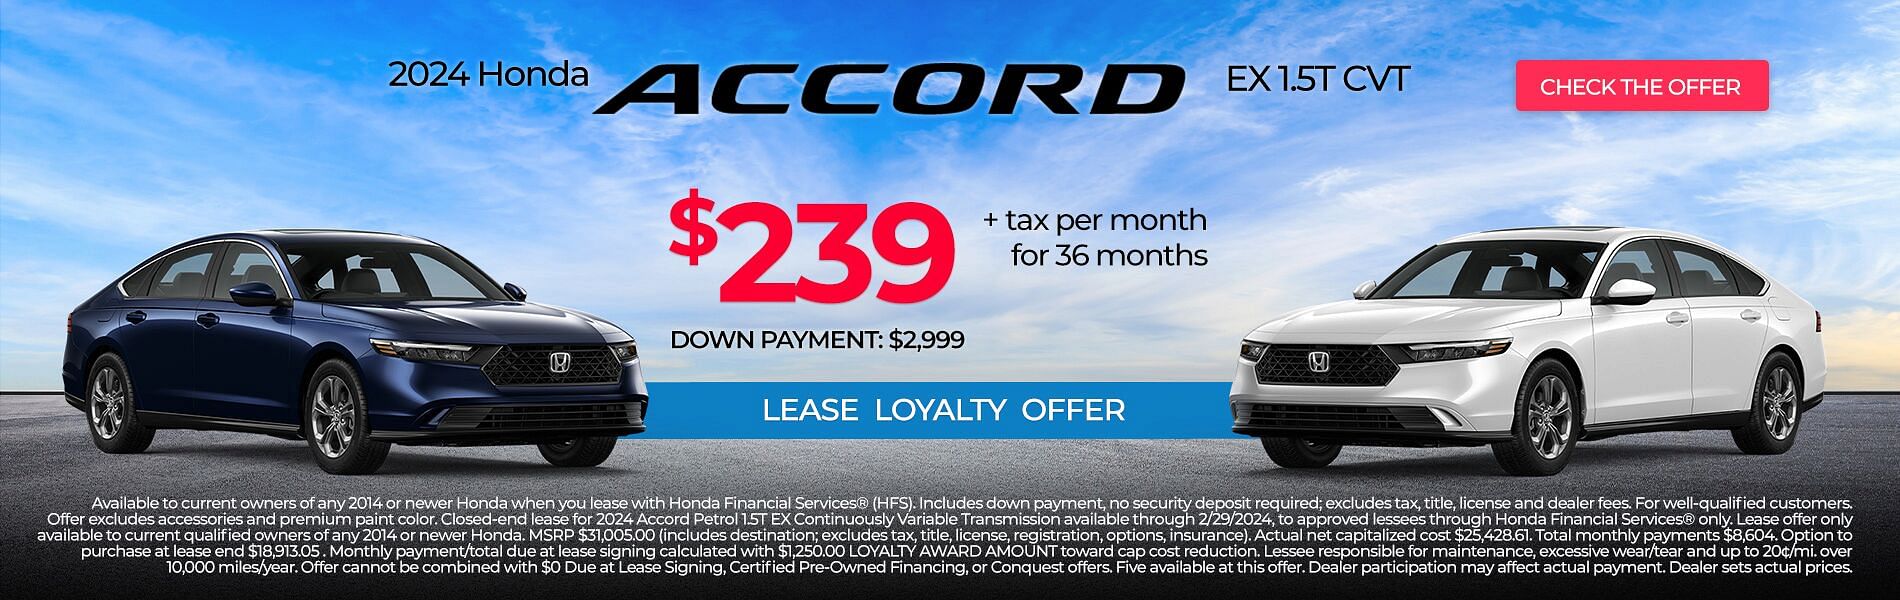 2024 Accord EX Lease $239